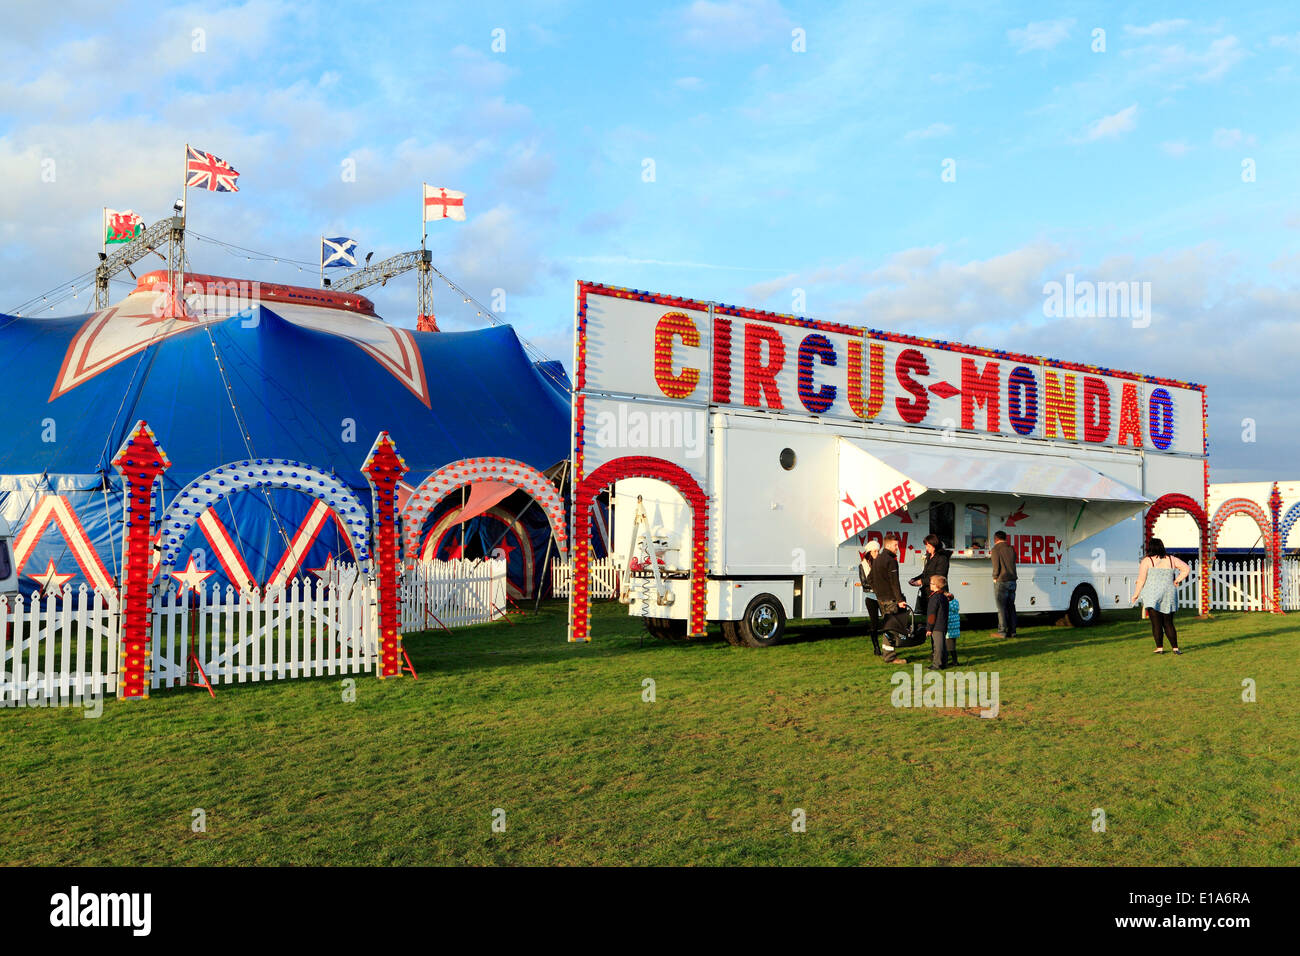 Mondao de cirque, spectacle de cirque voyager UK montre Big Top Kings Lynn Angleterre Banque D'Images